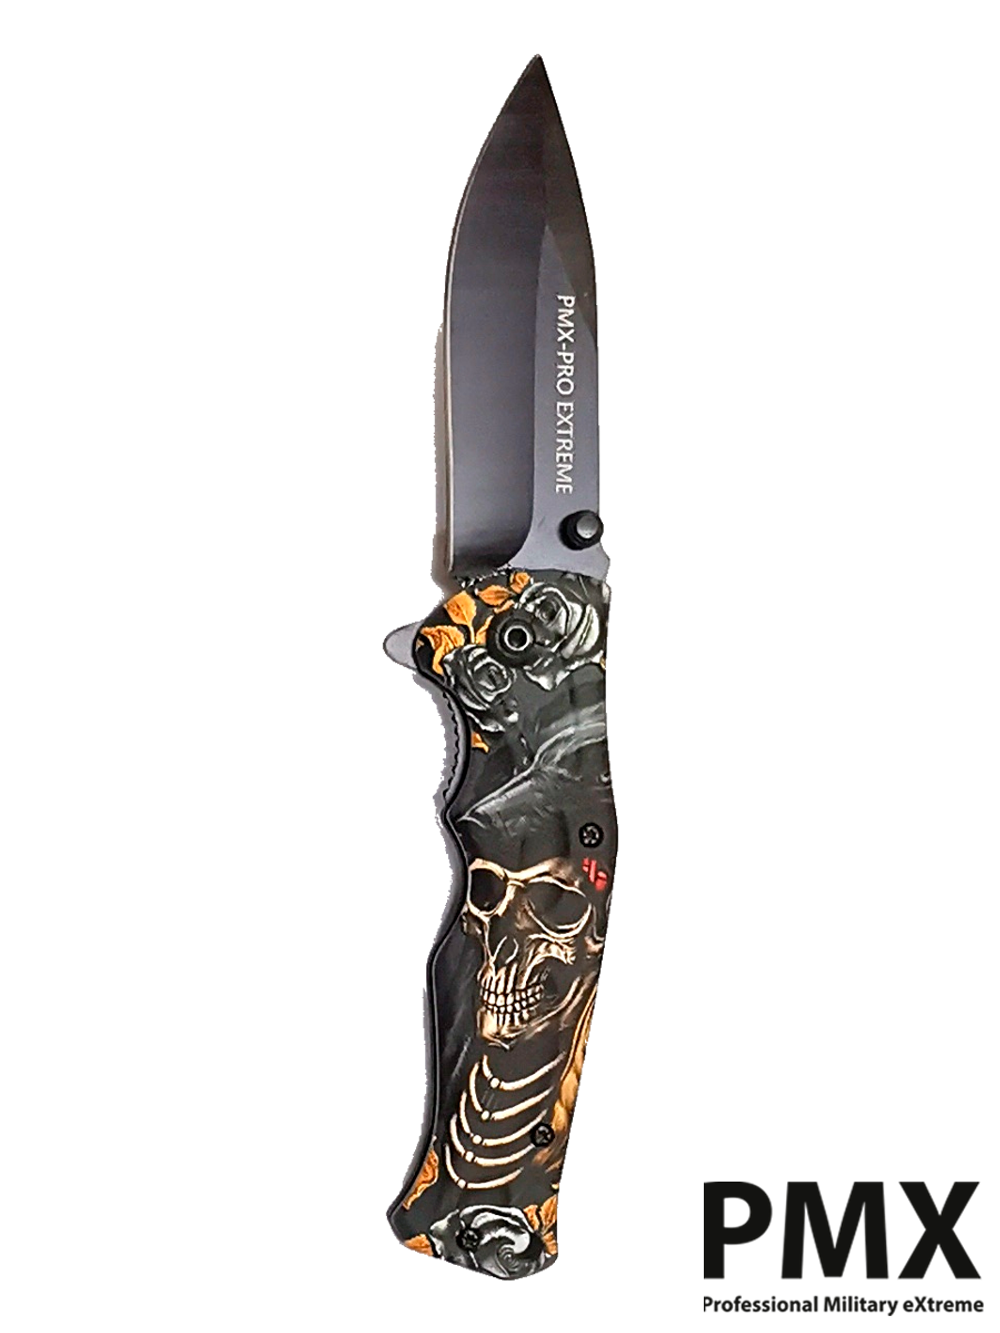 Нож складной PMX-PRO Extreme Special Series (PMX-011B) сталь AUS8. Со скелетом пирата